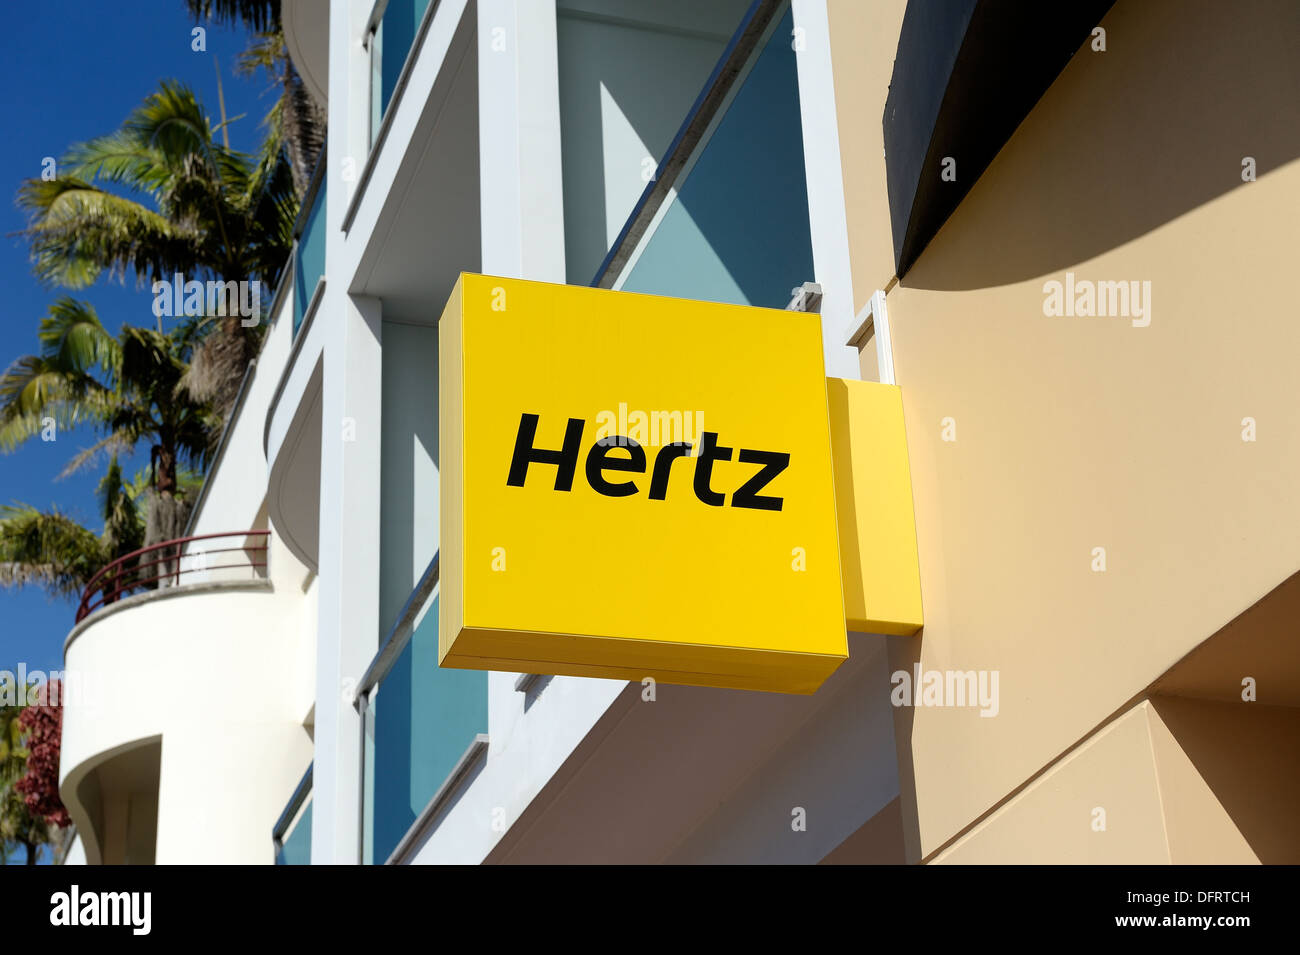 Hertz car rental shop sign Stock Photo